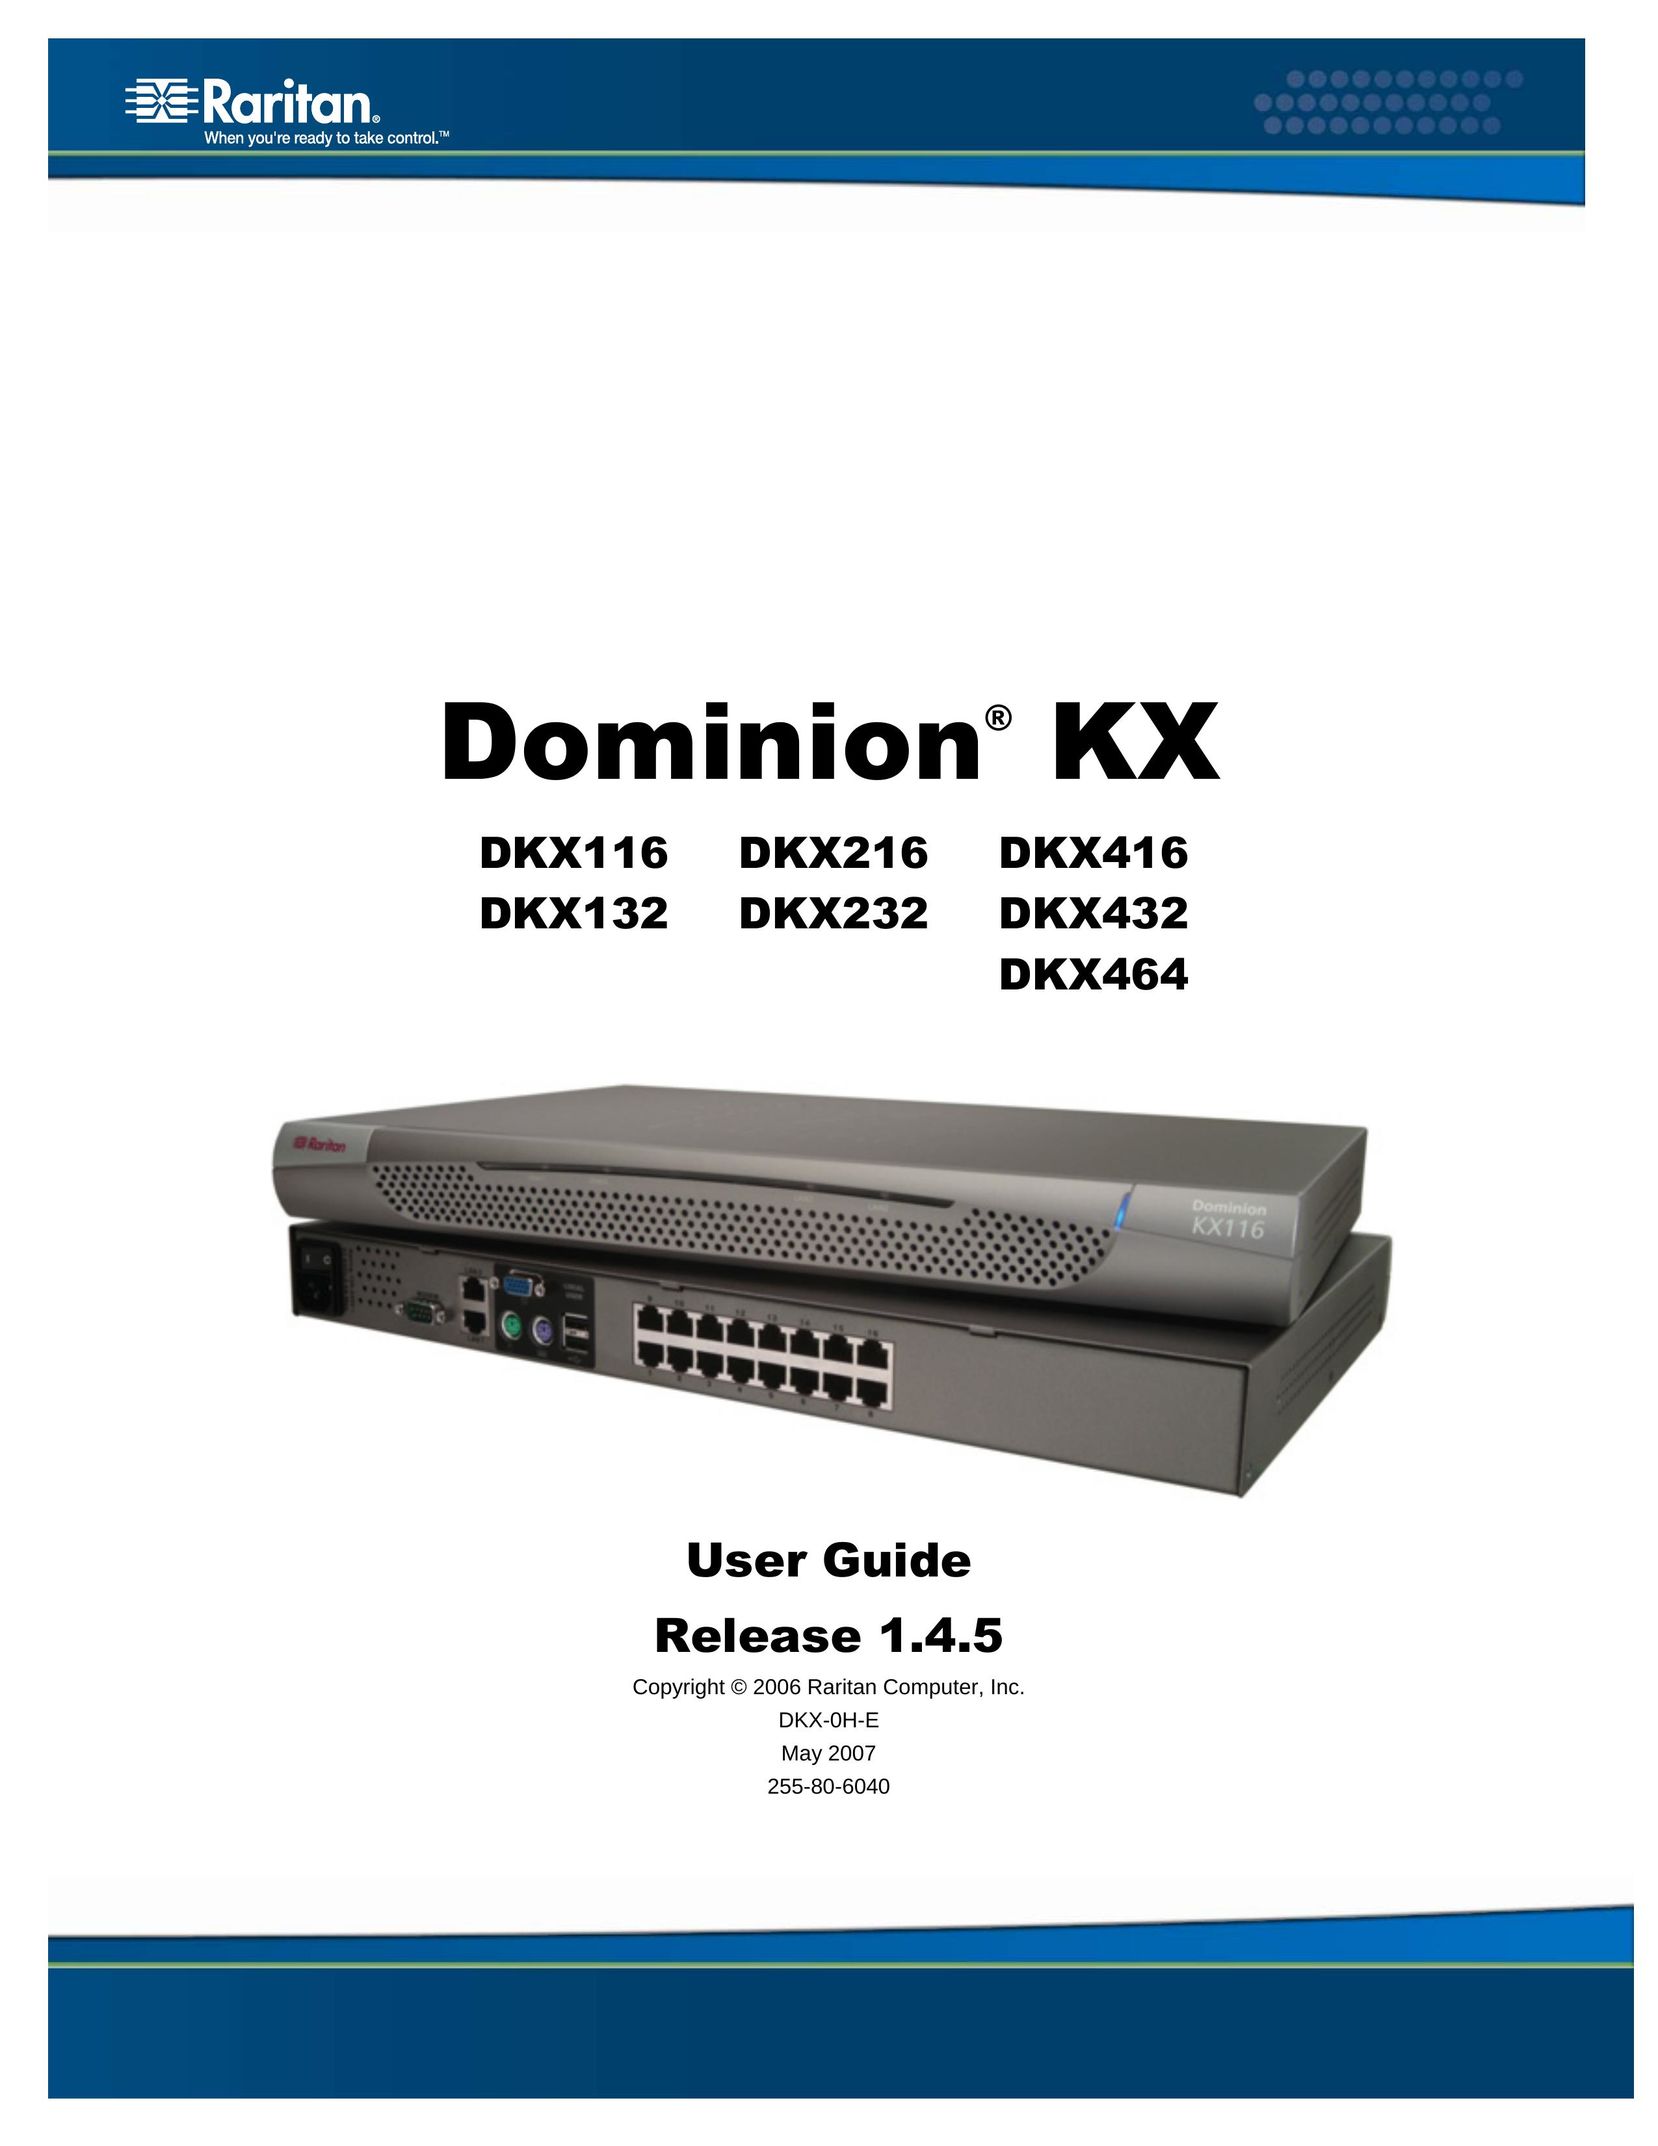 Raritan Computer DKX464 Network Router User Manual